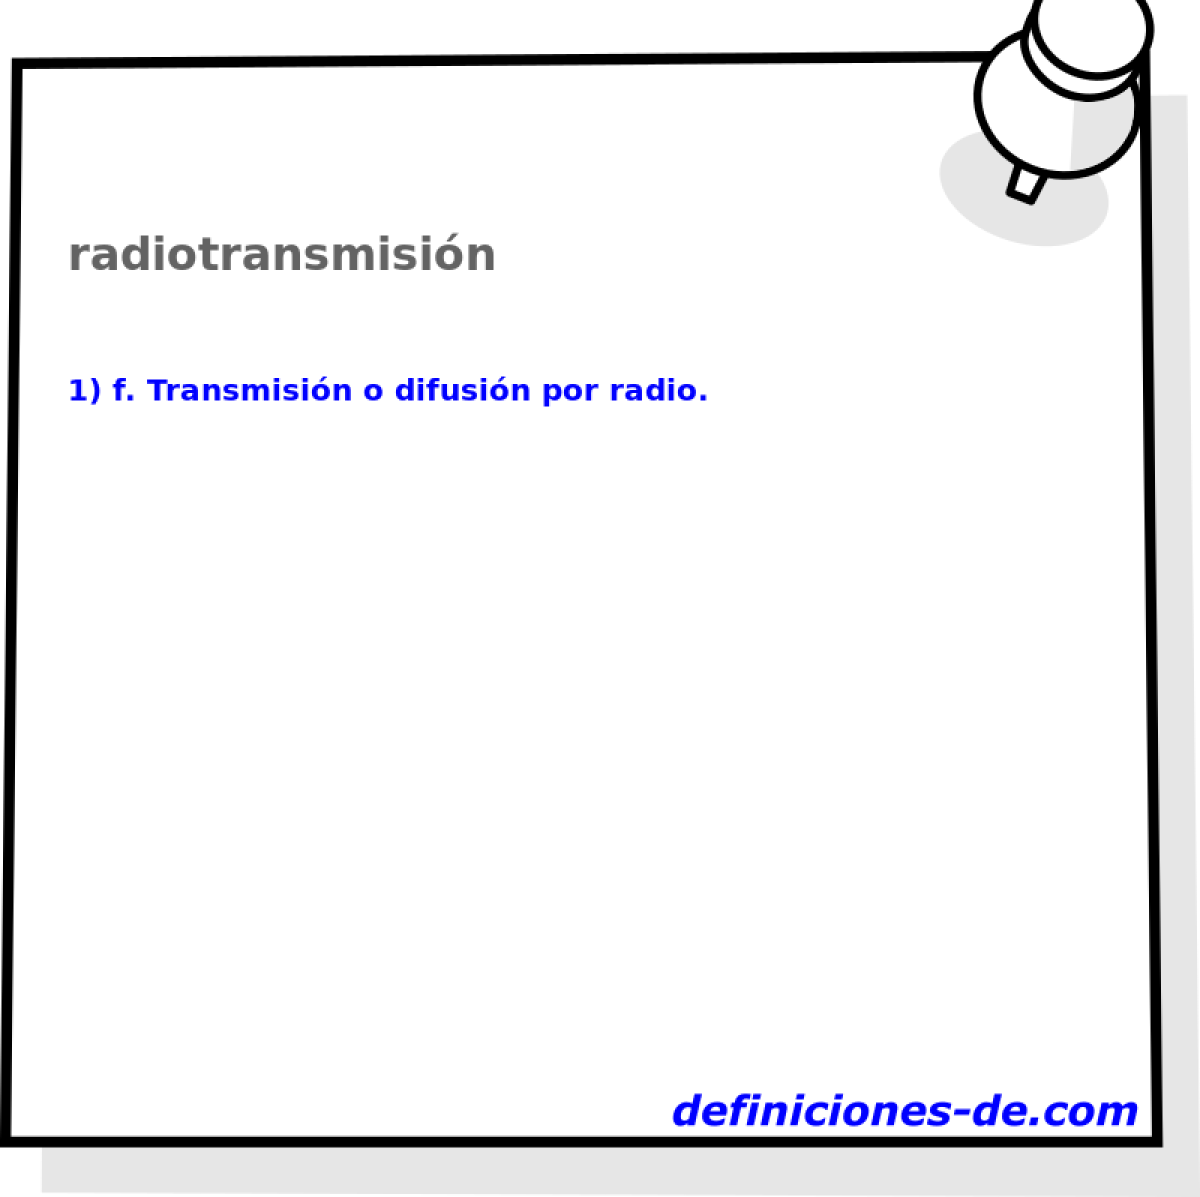 radiotransmisin 